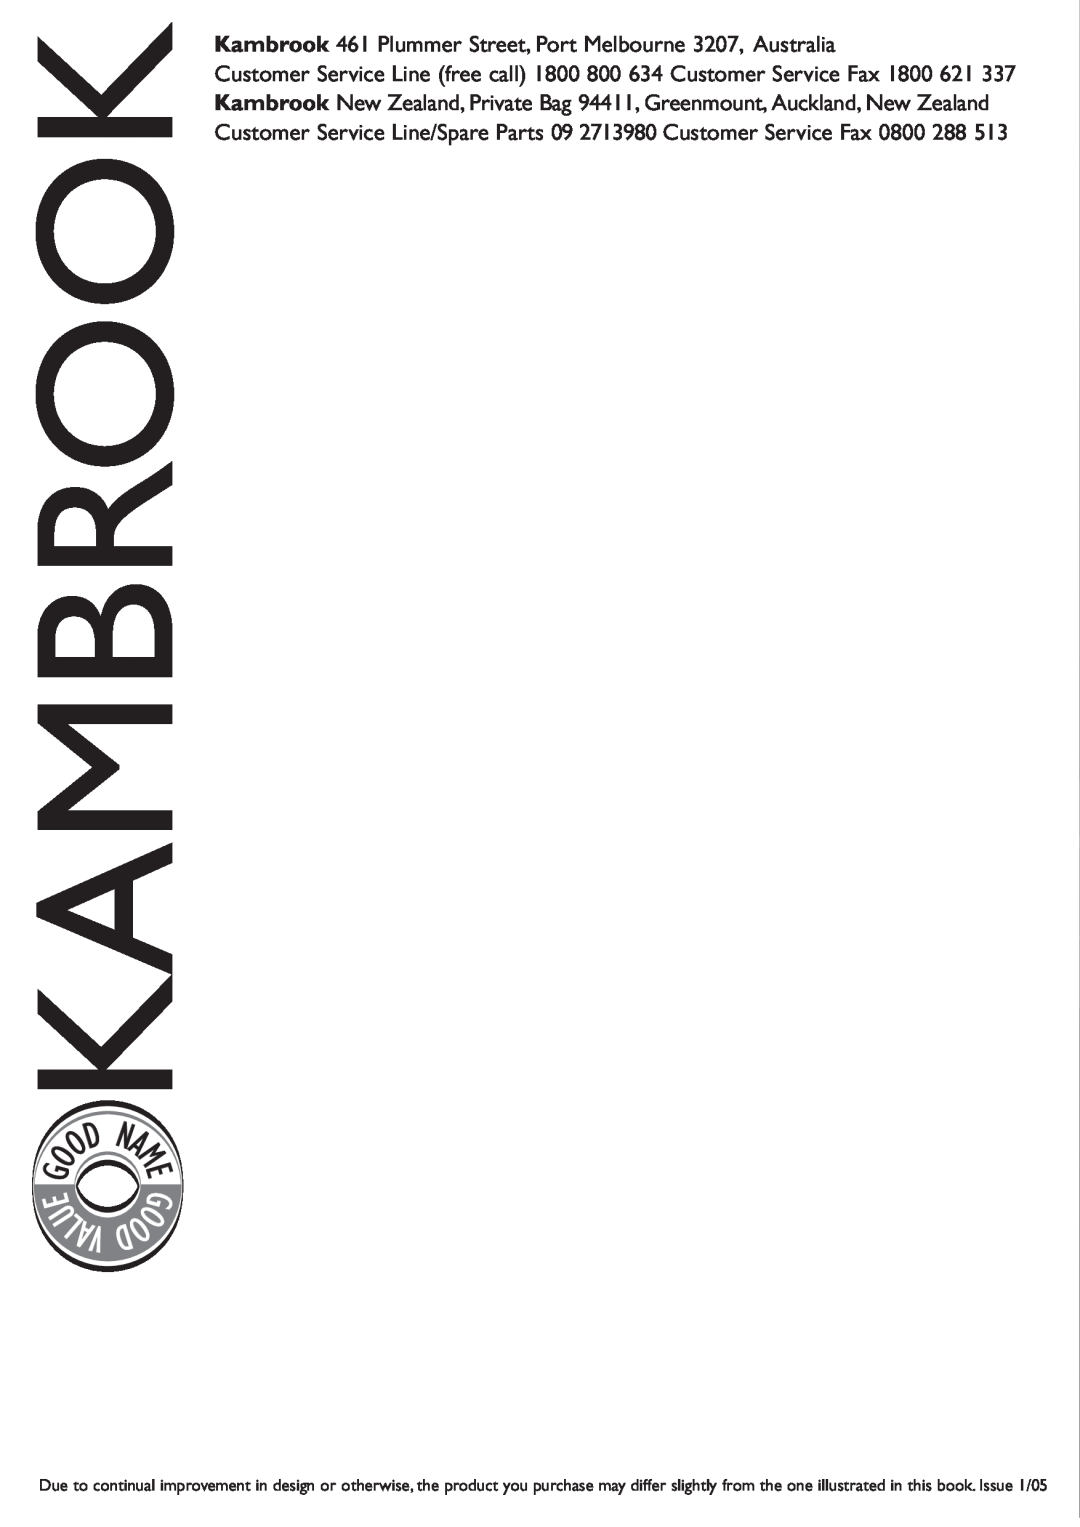 Kambrook KPC10 manual U Lav, Kambrook 461 Plummer Street, Port Melbourne 3207, Australia 